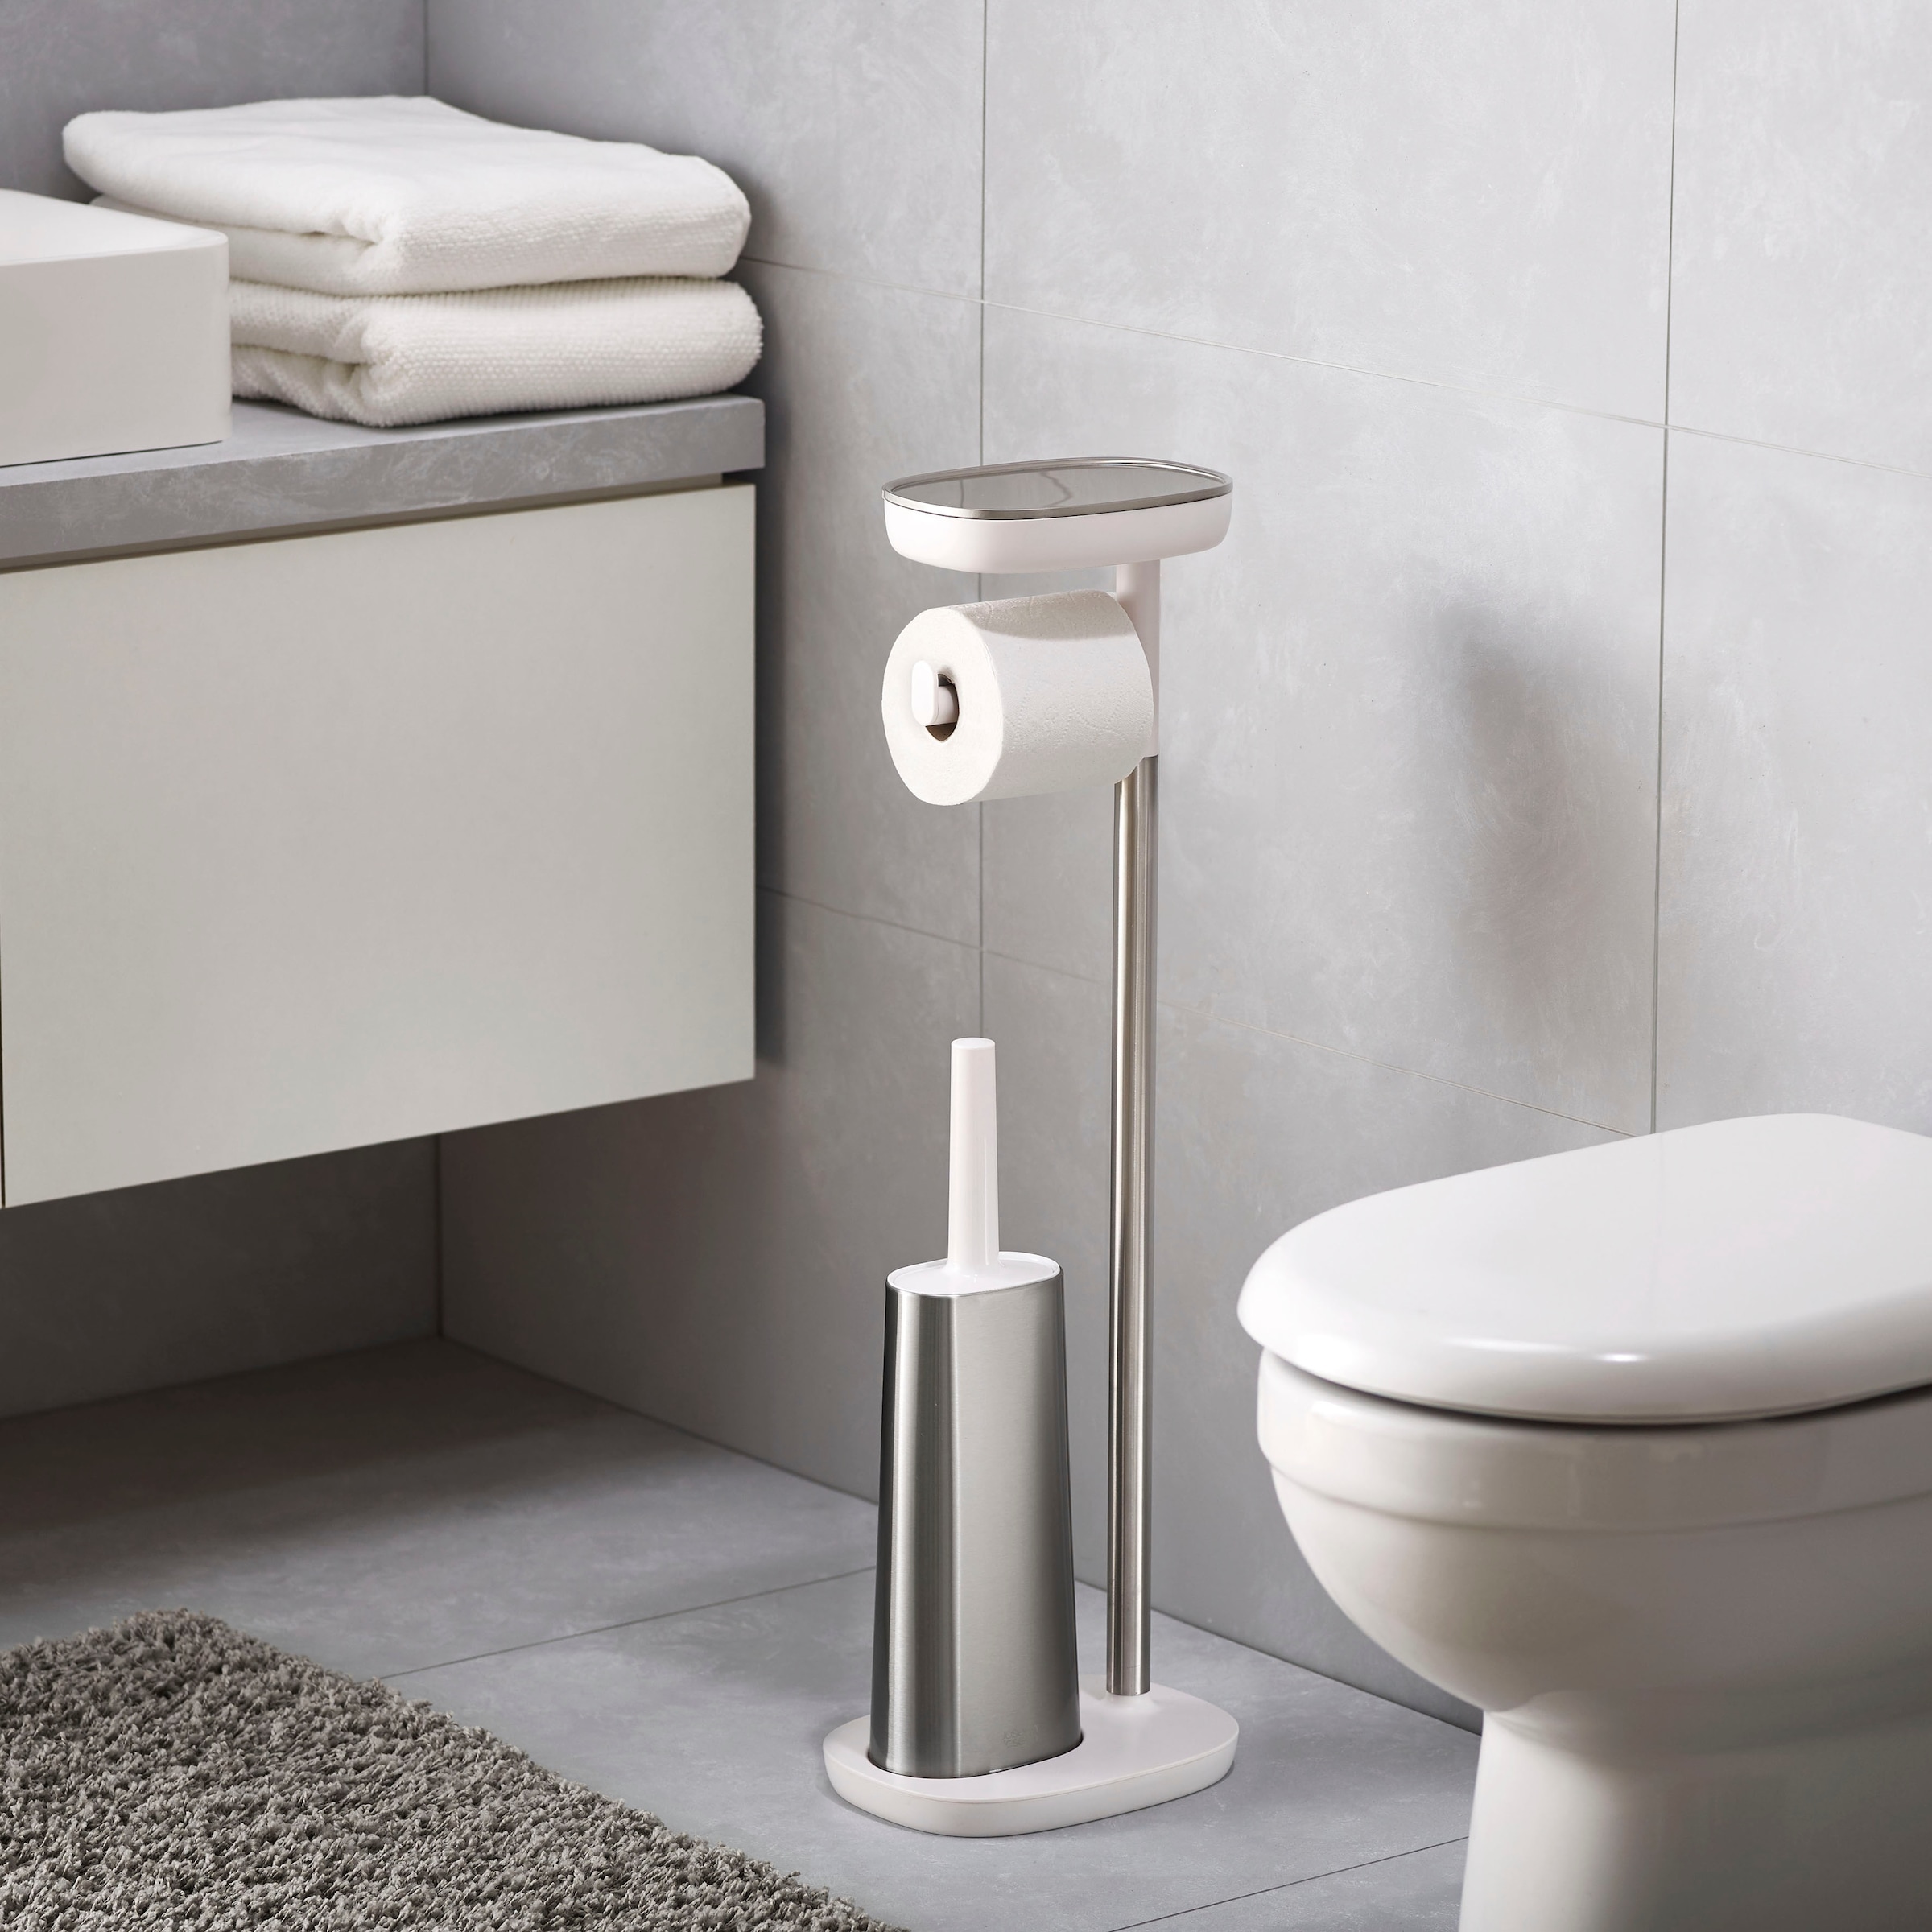 Joseph Joseph Toilettenpapierhalter »EasyStore™«, mit integrierter Flex Toilettenbürste, 74 cm Höhe